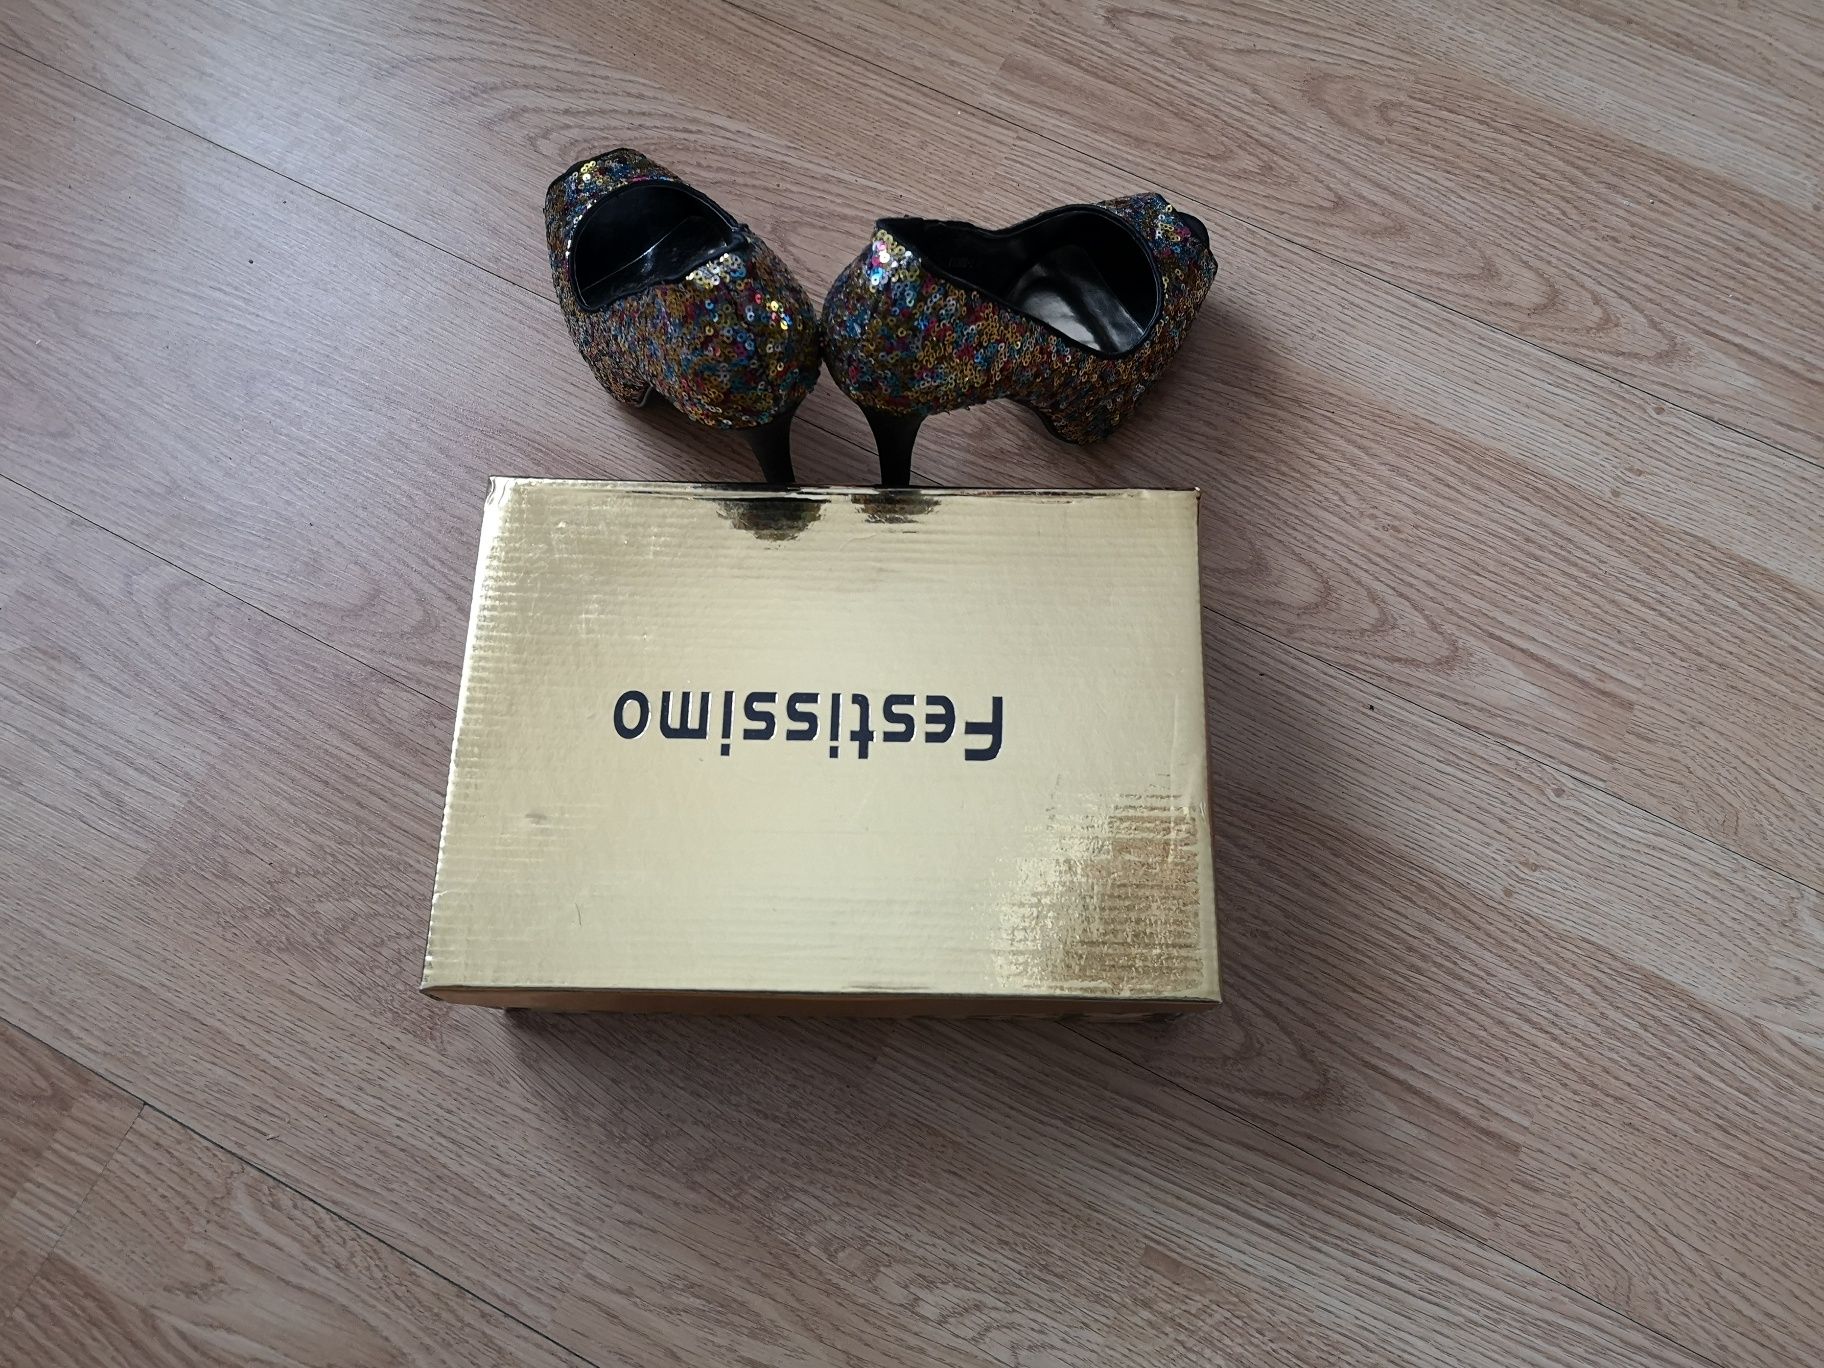 НОВИ Festissimo луксозни обувки със златни пайети висок ток, Размер 39